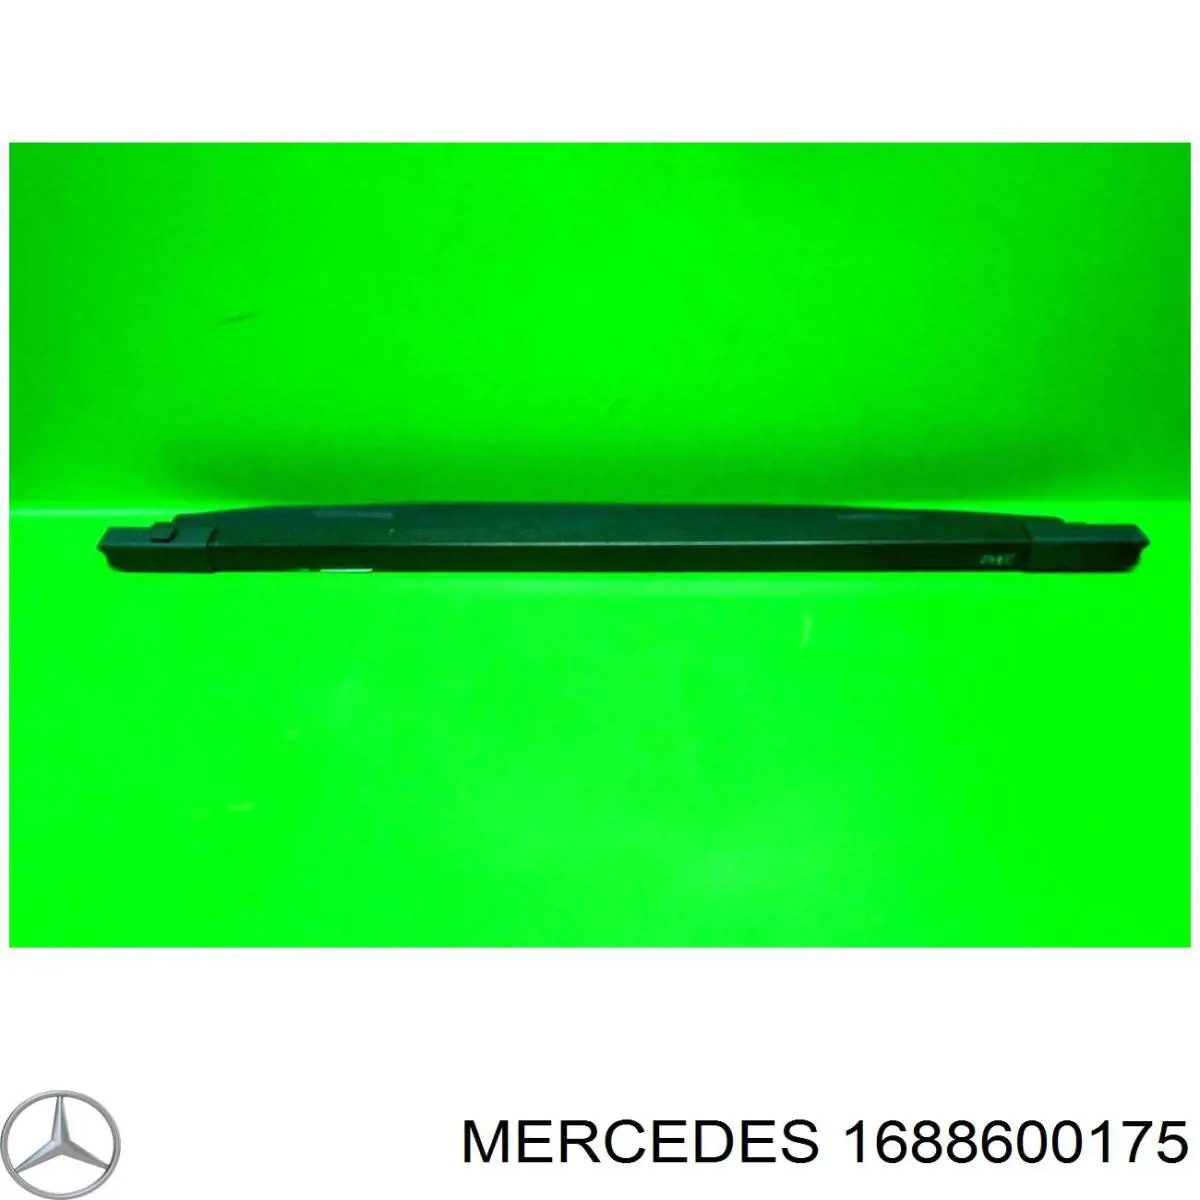 1688600175 Mercedes cortina del compartimento de carga